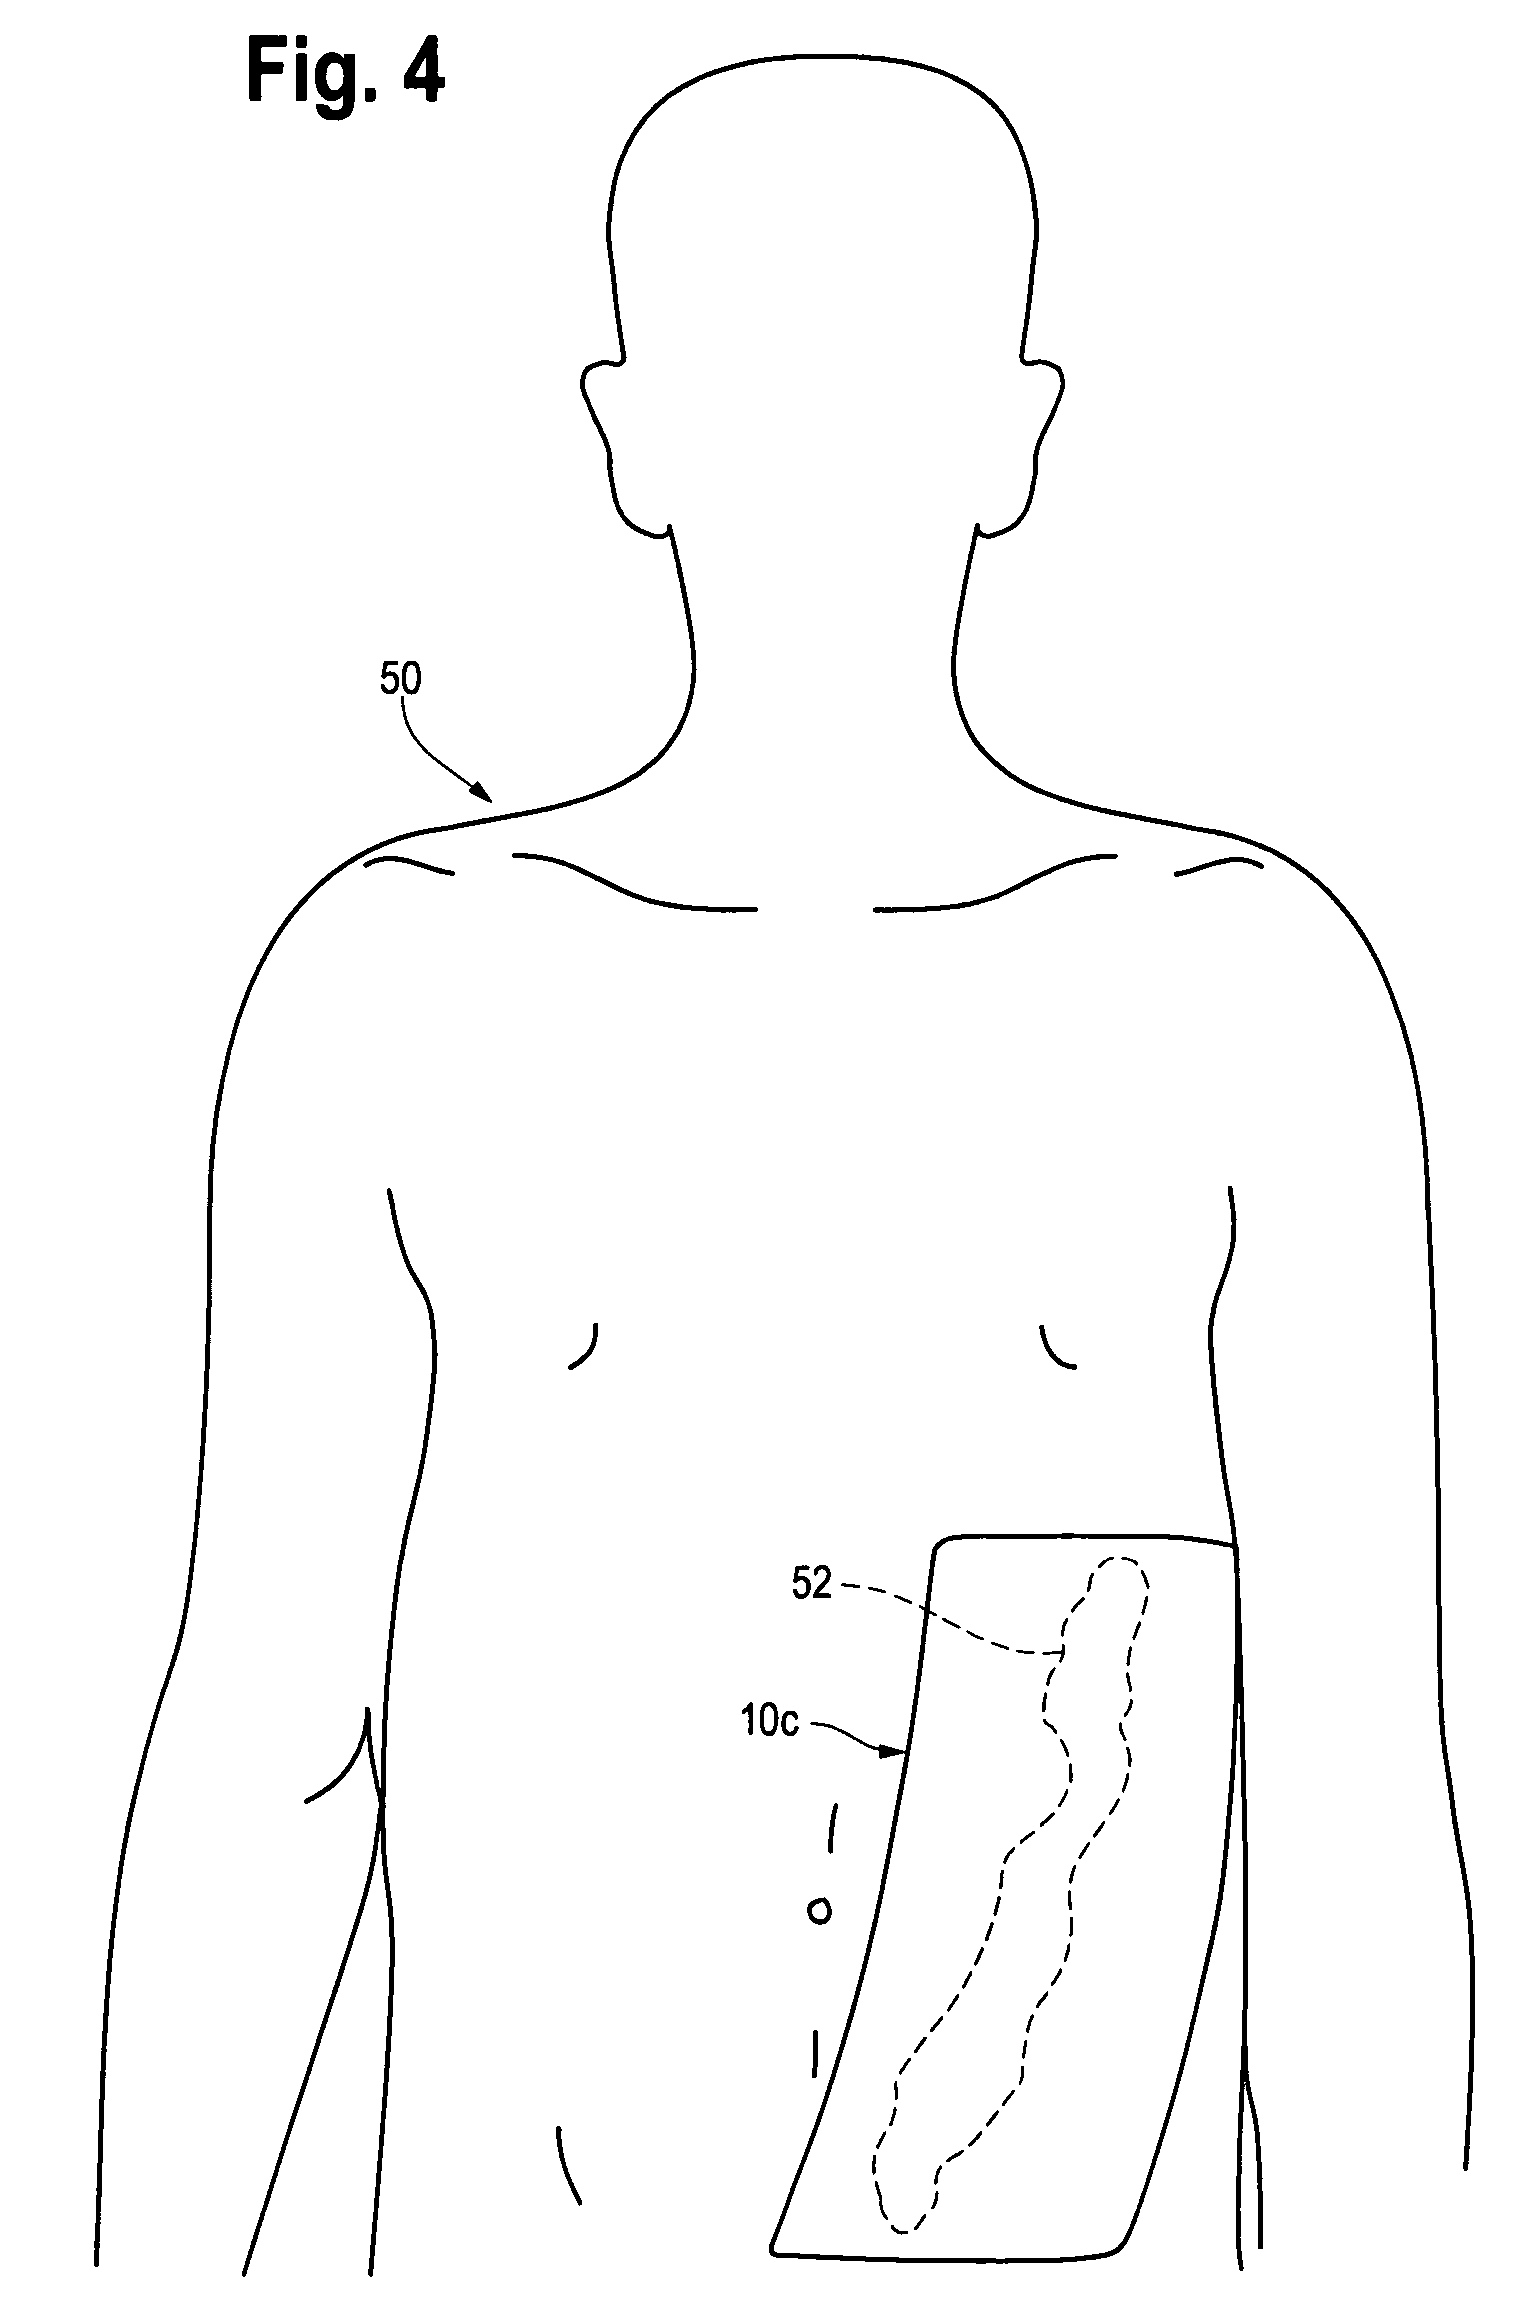 Injection and hemostasis site